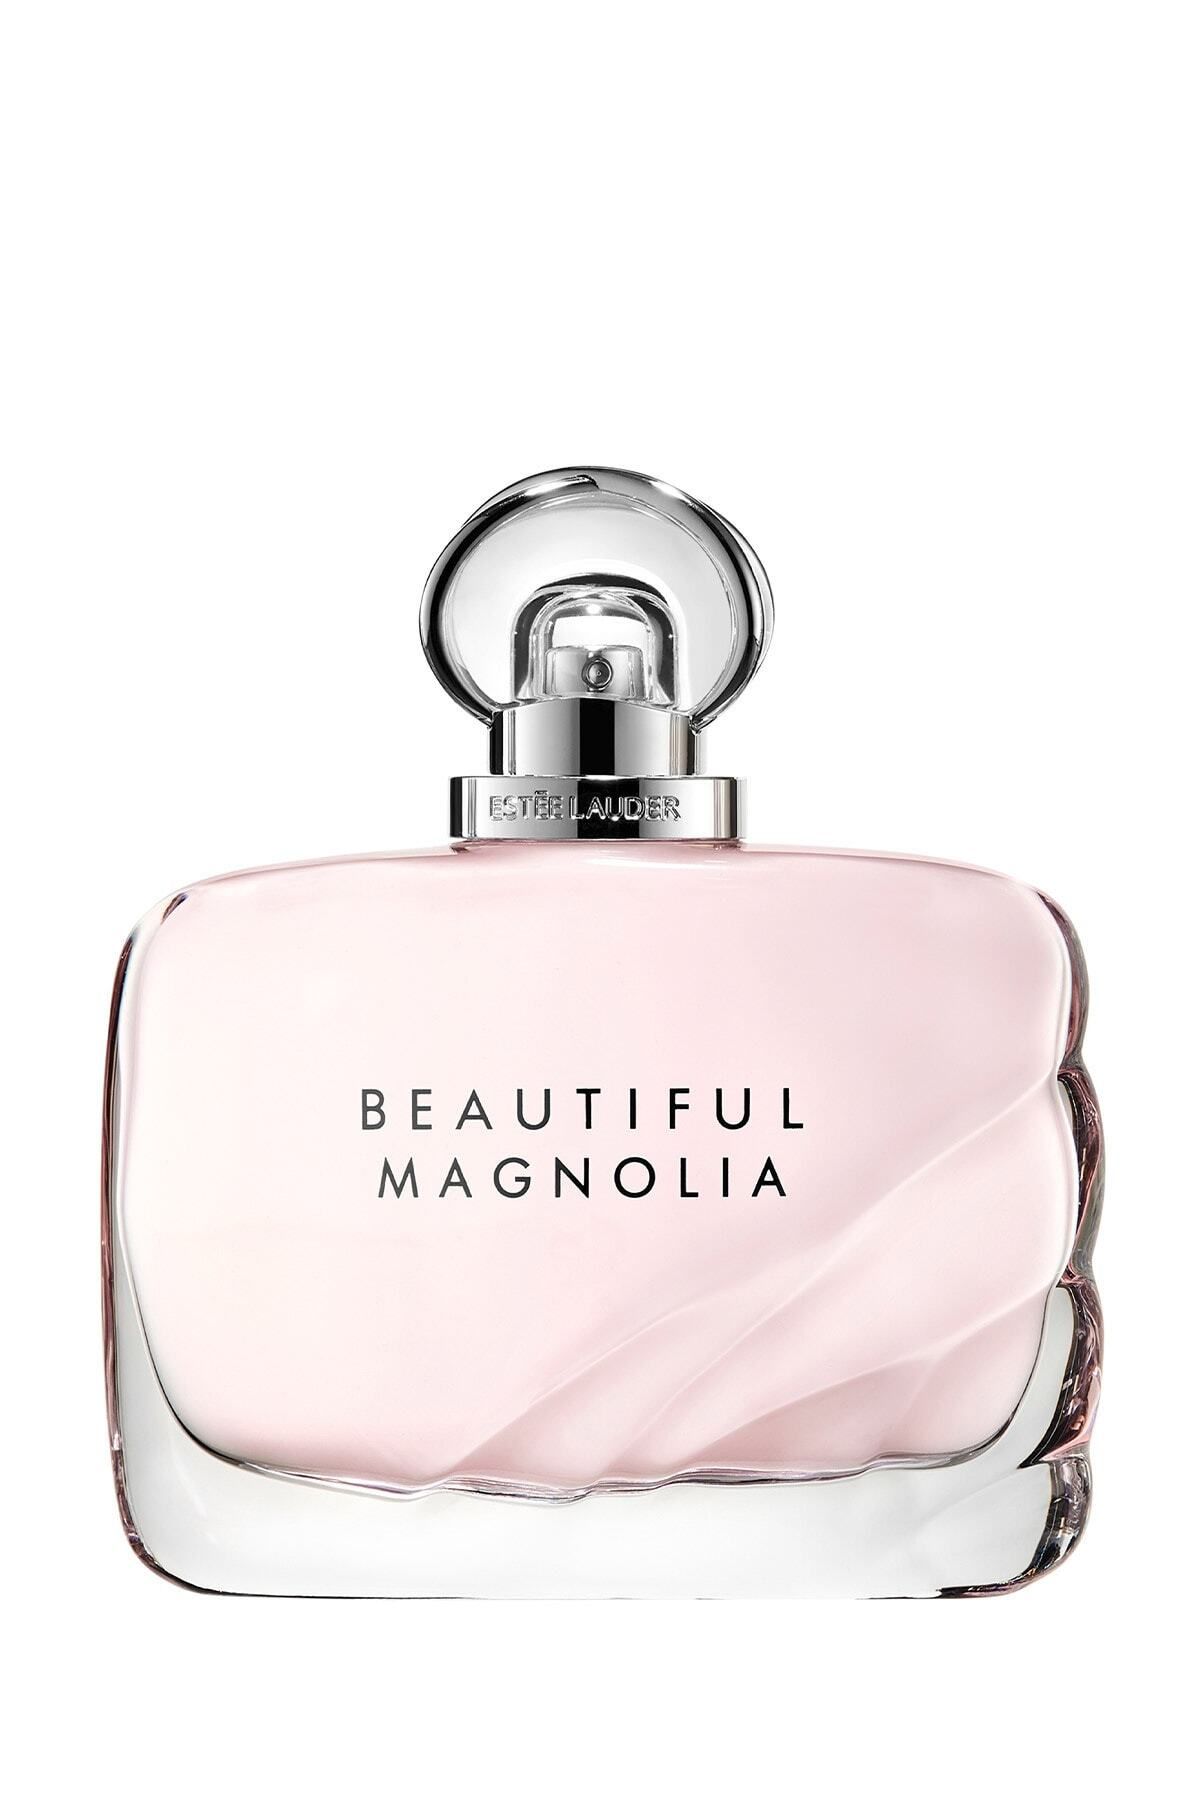 Estee Lauder عطر زنانه Beautiful Magnolia ادوپرفیوم - 100ml